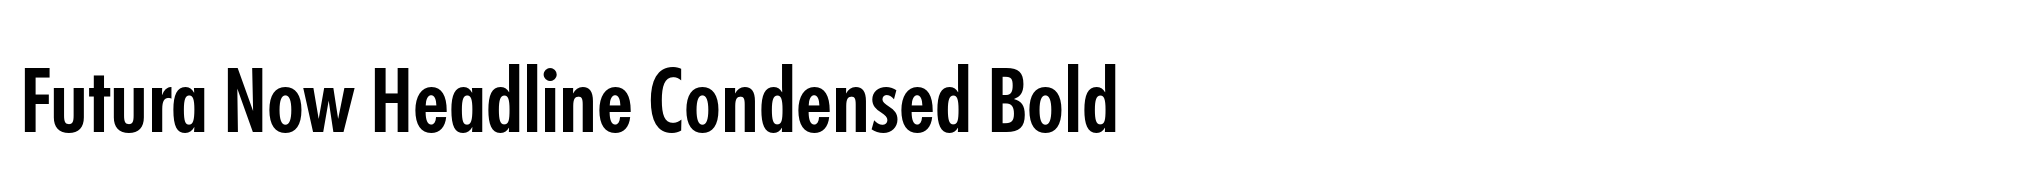 Futura Now Headline Condensed Bold image